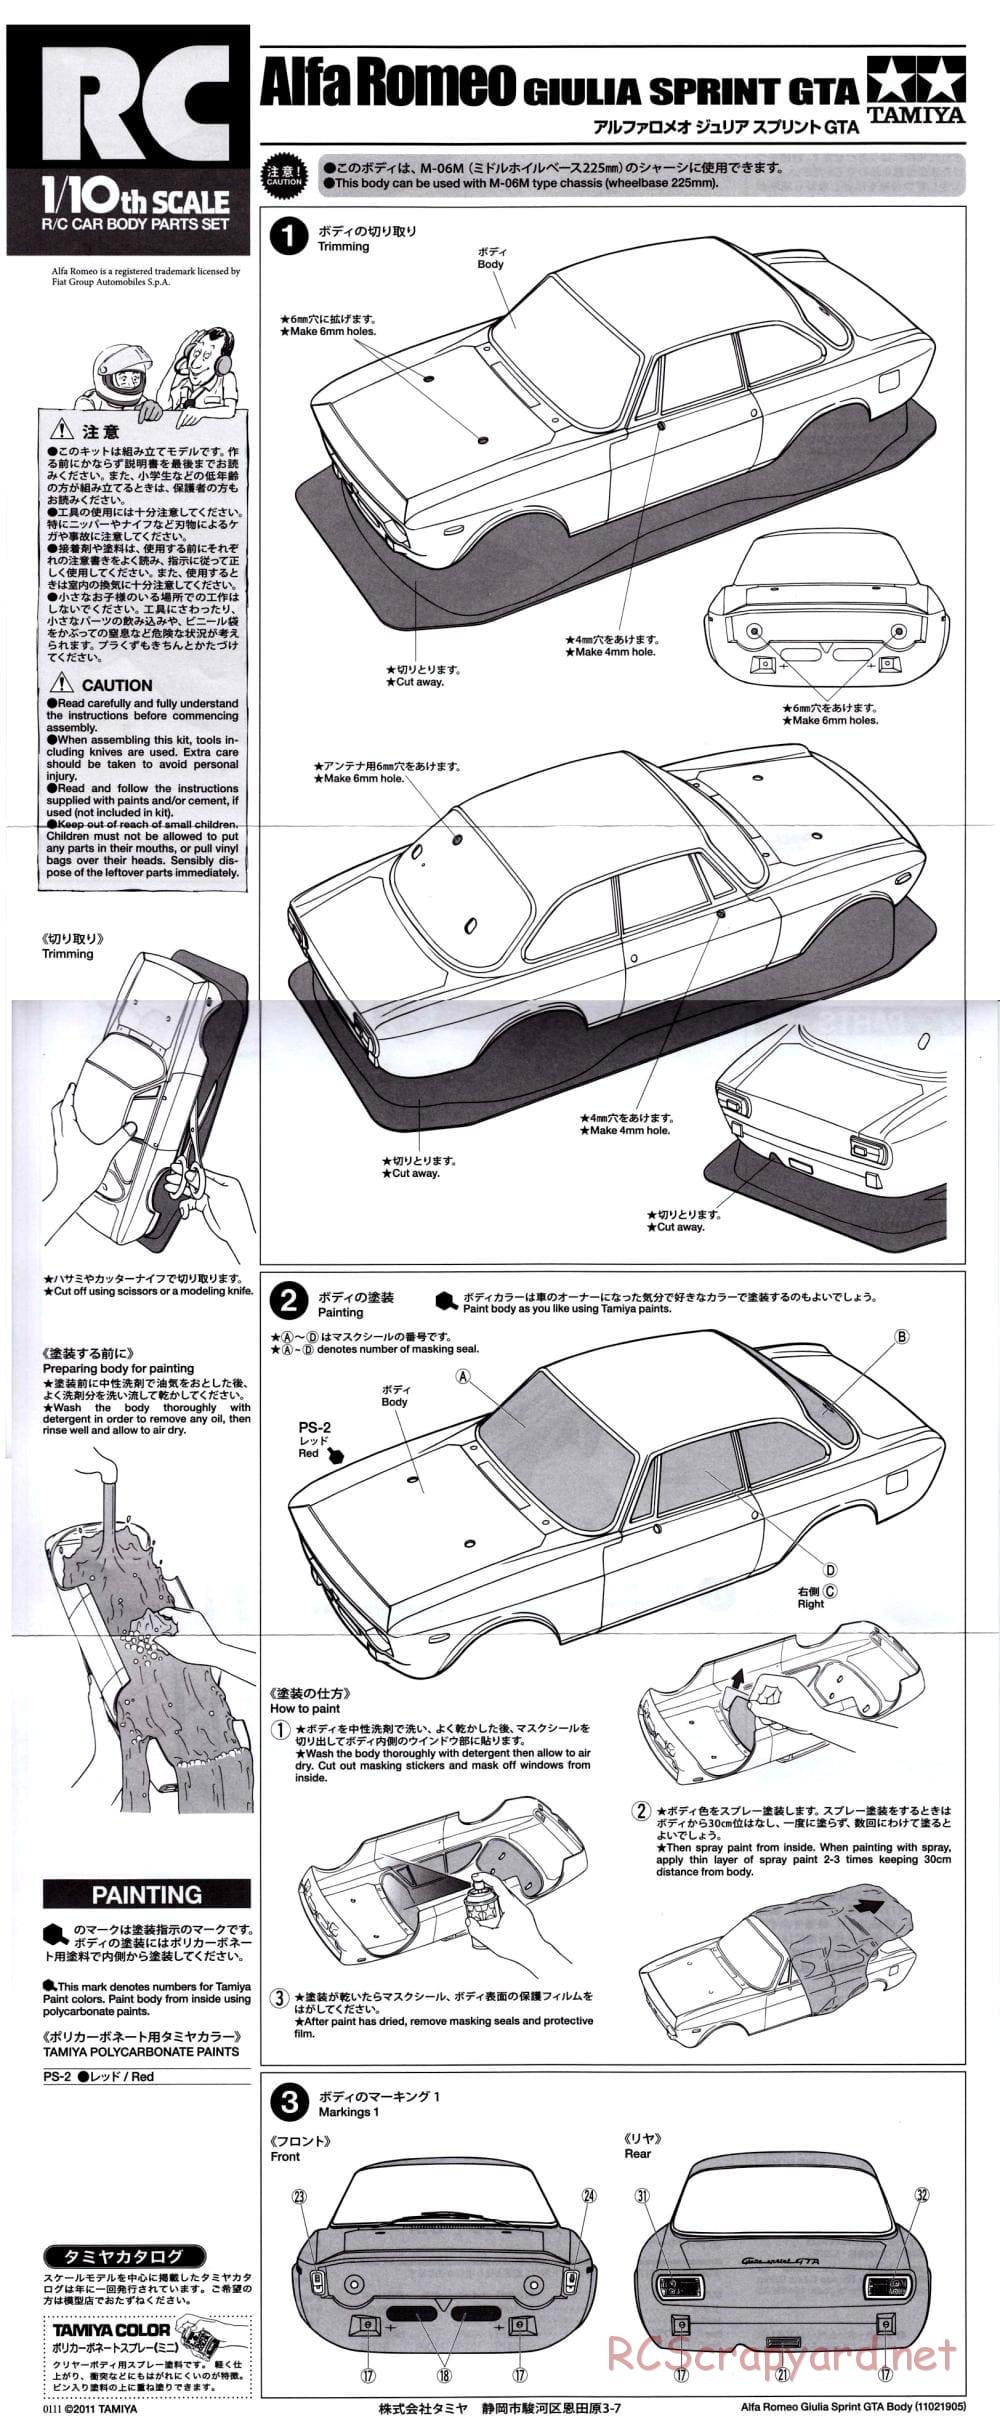 Tamiya - Alfa Romeo Giulia Sprint GTA - M-06 Chassis - Body Manual - Page 1